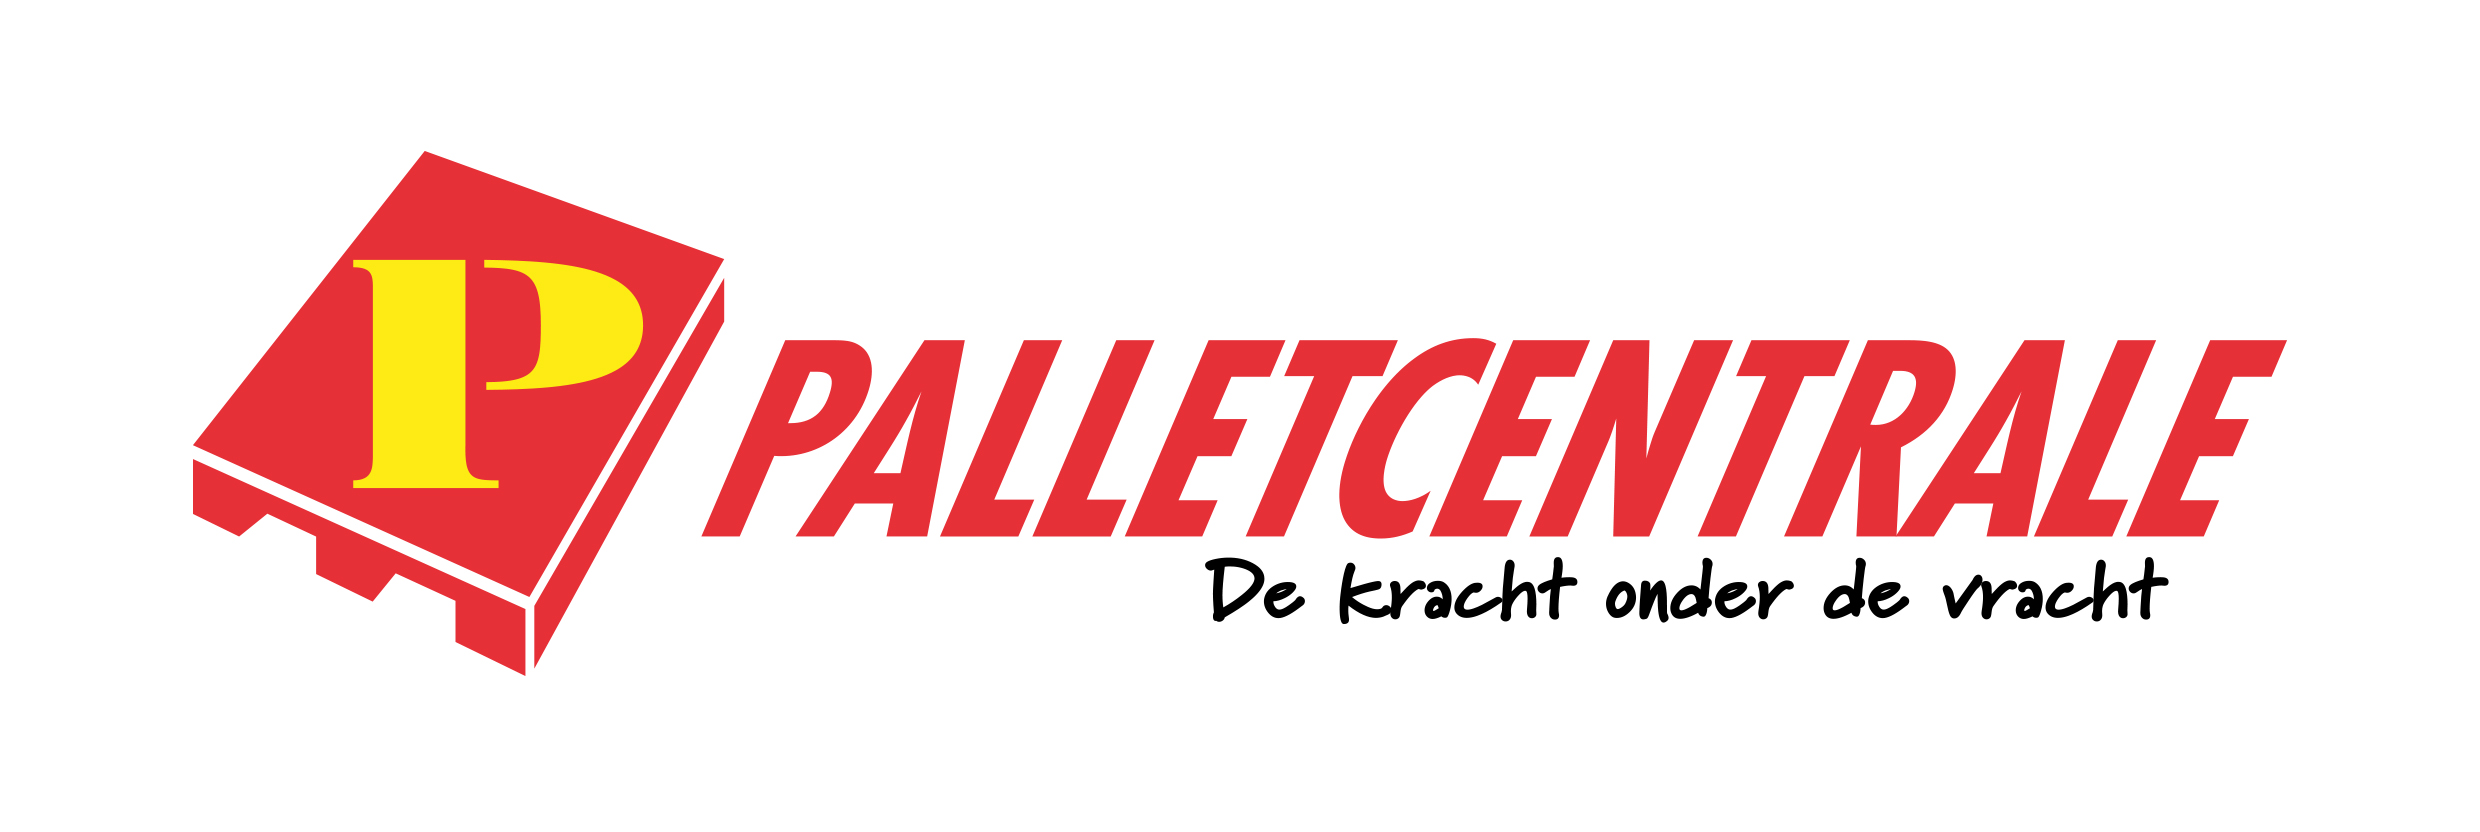 Palletcentrale